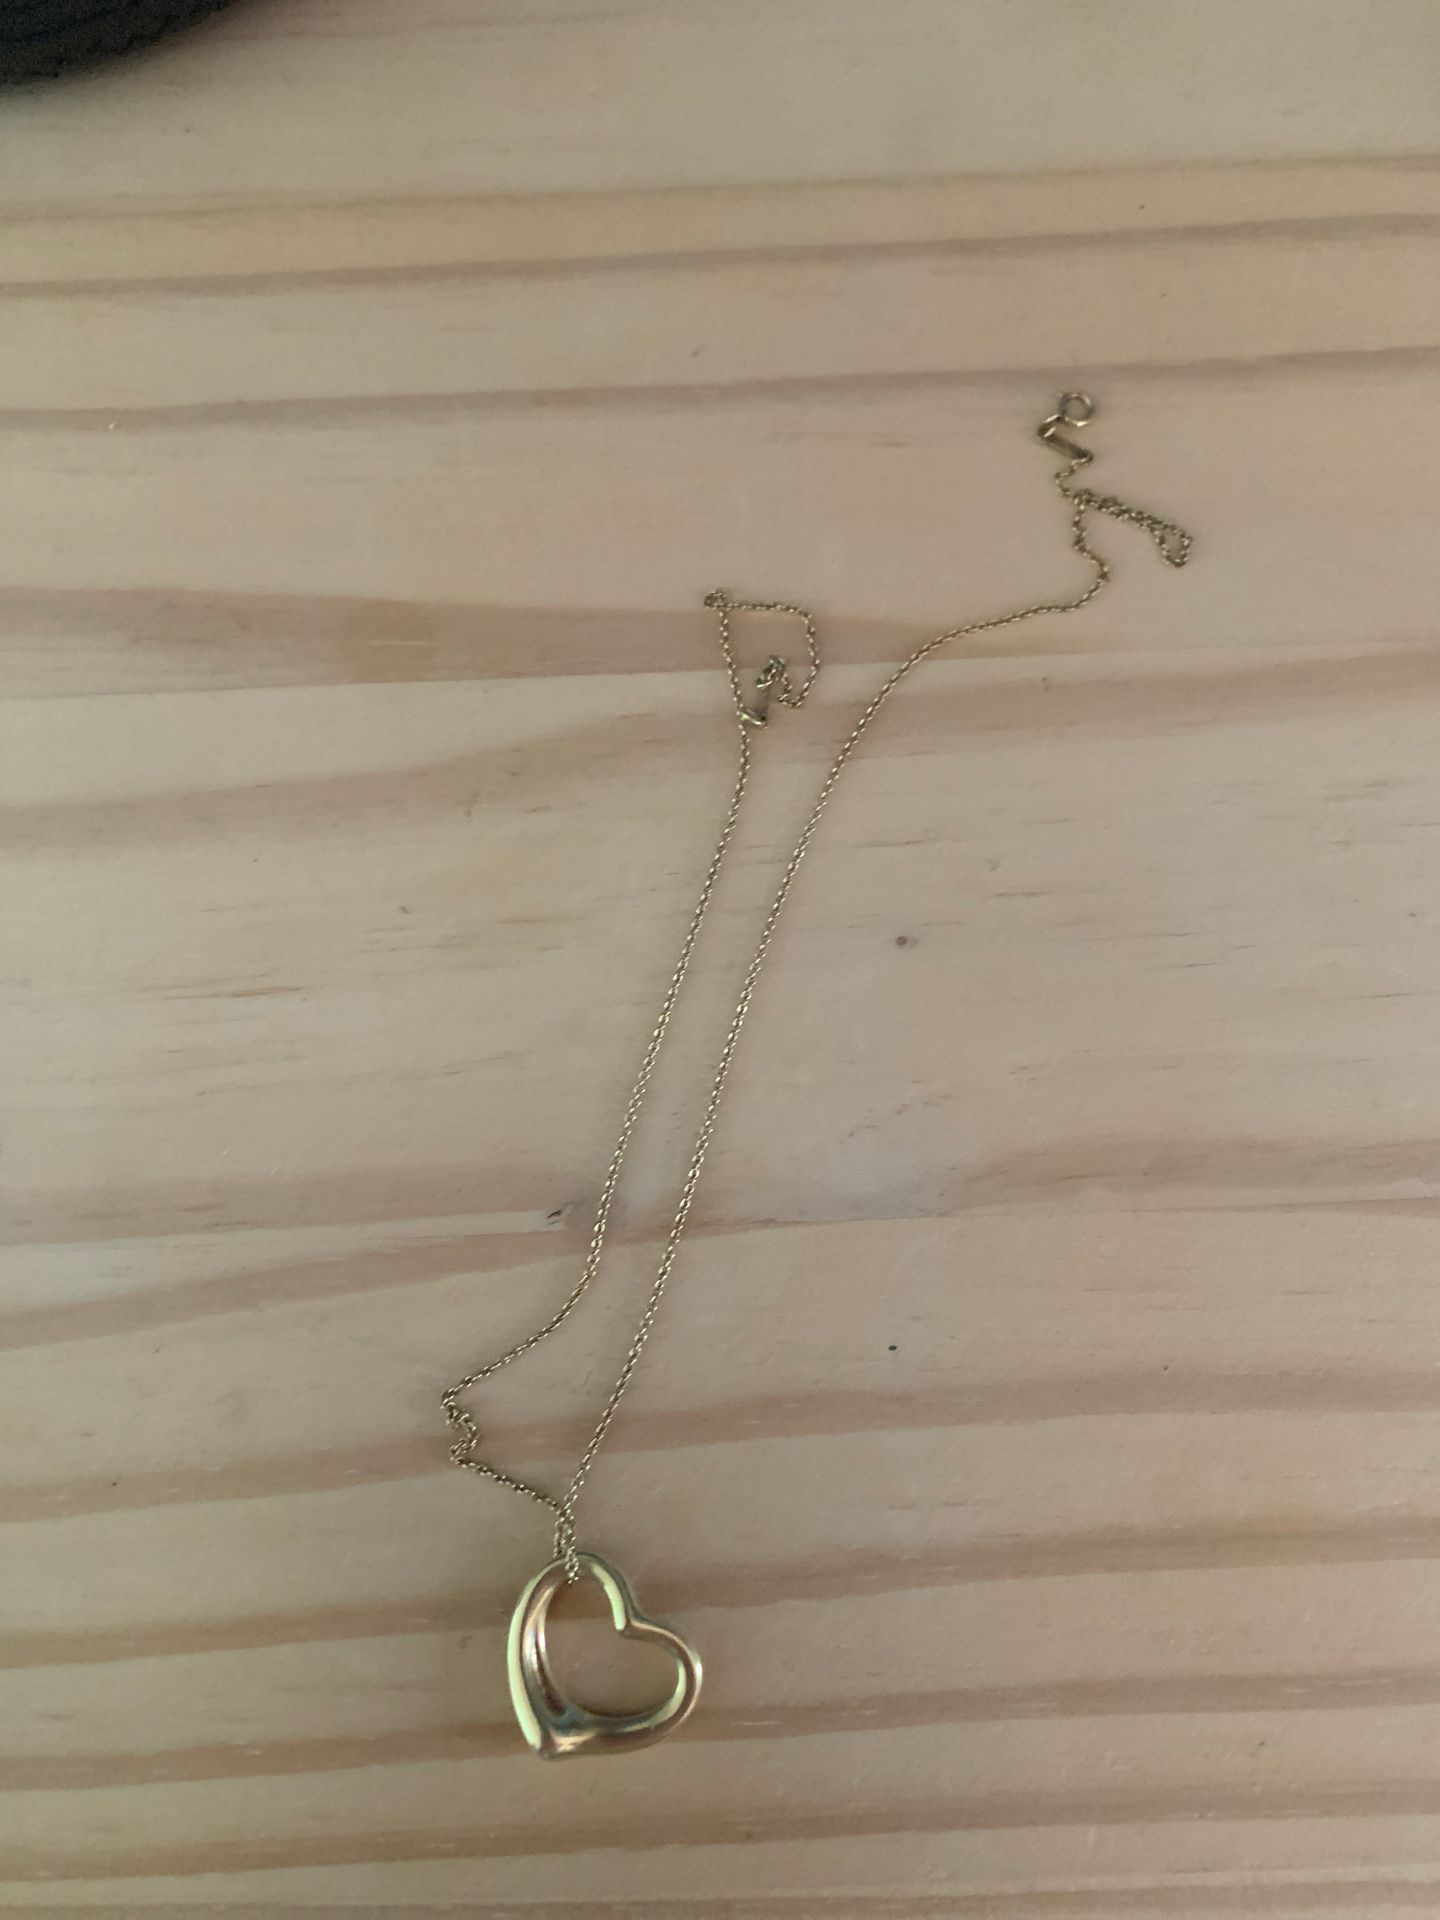 18k gold Tiffany necklace